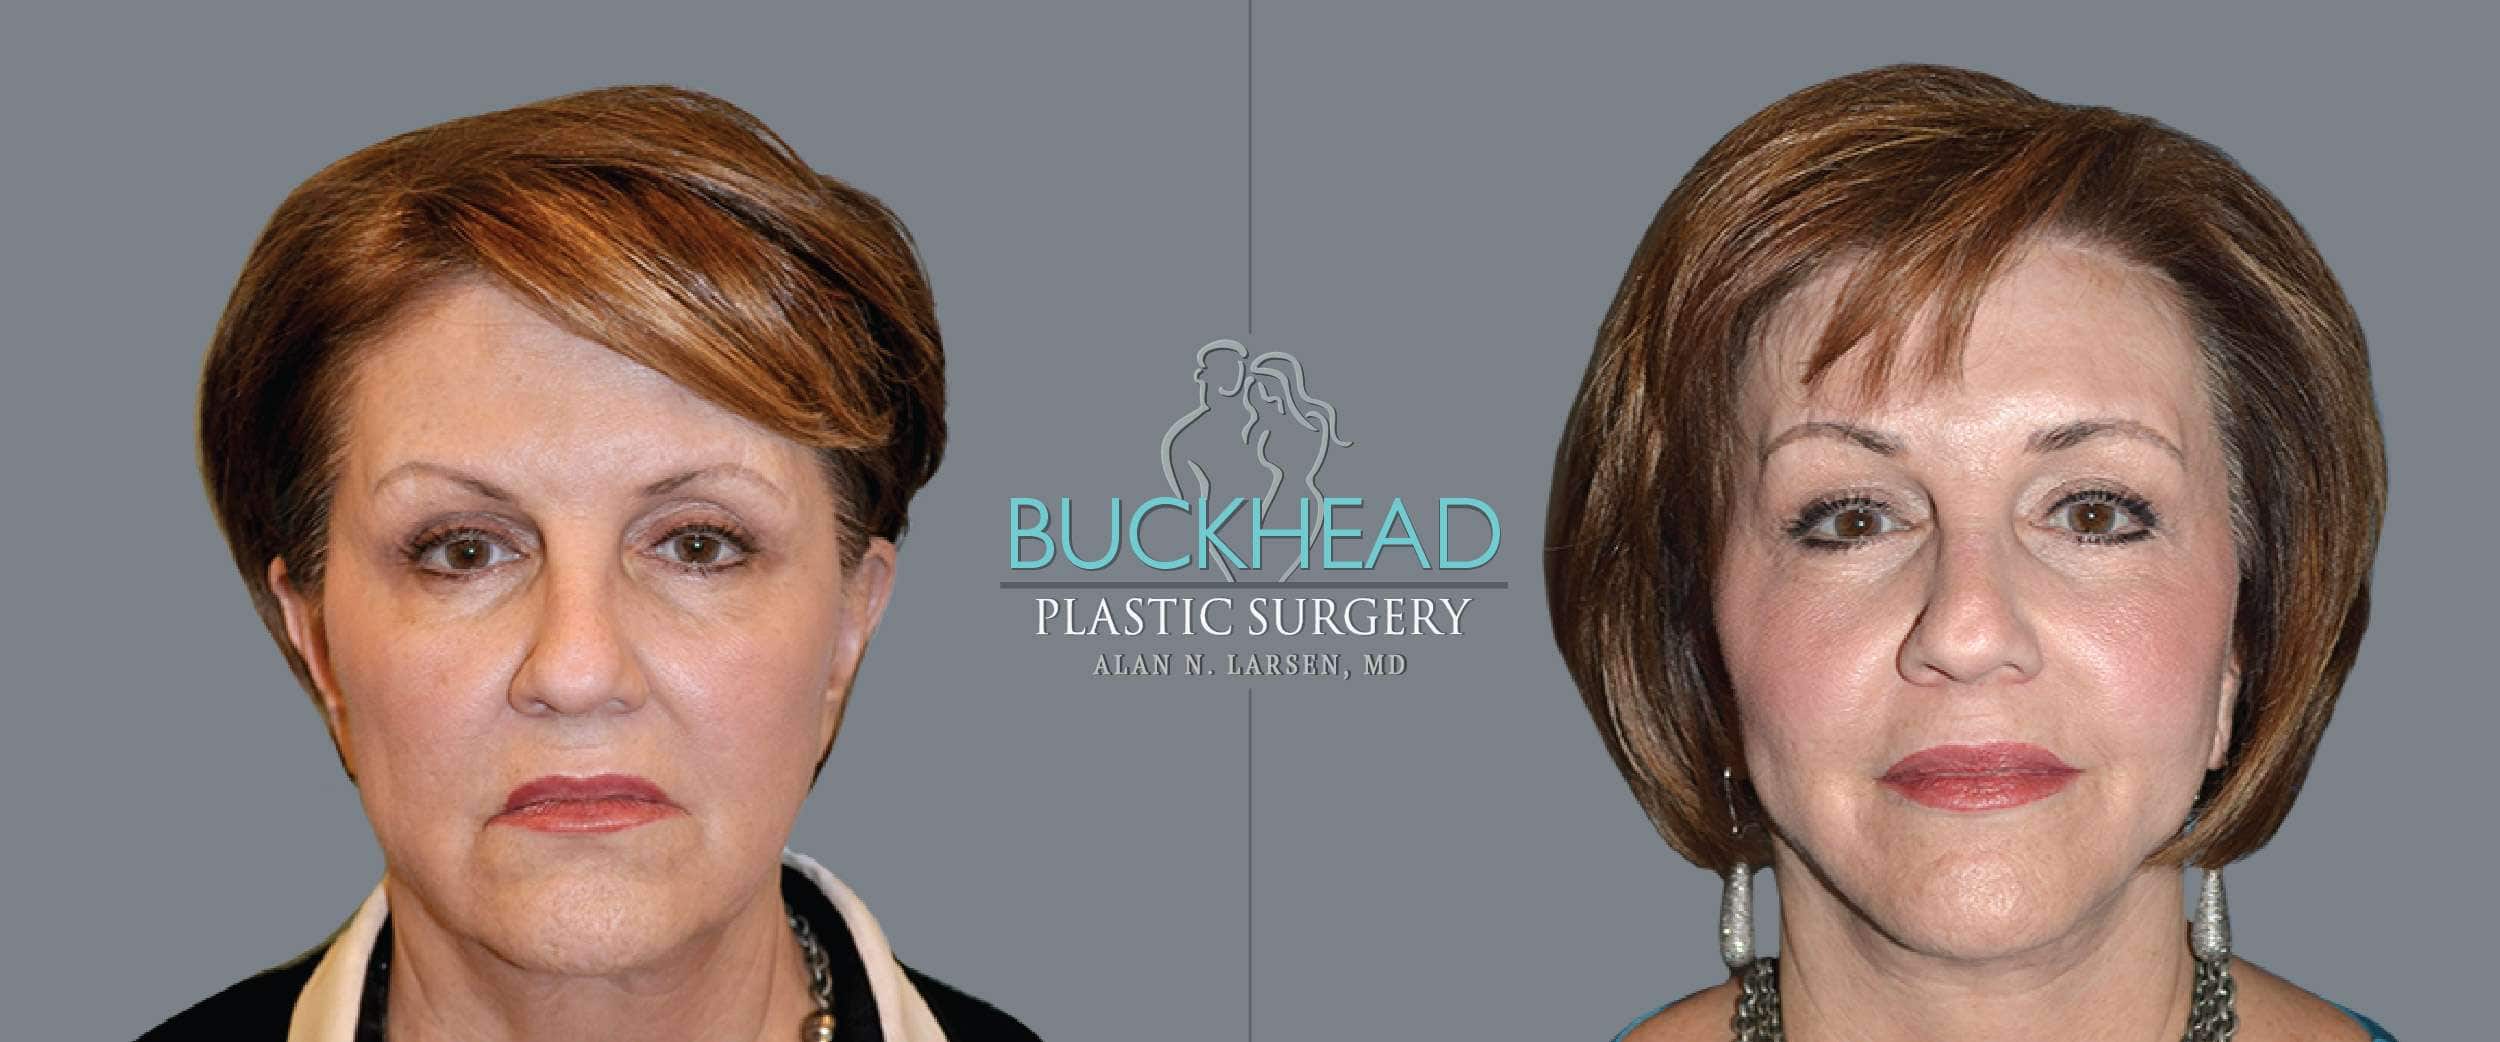 Before and After Photo Gallery | Blepharosty | Buckhead Plastic Surgery | Alan N. Larsen, MD | Board-Certified Plastic Surgeon | Atlanta GA